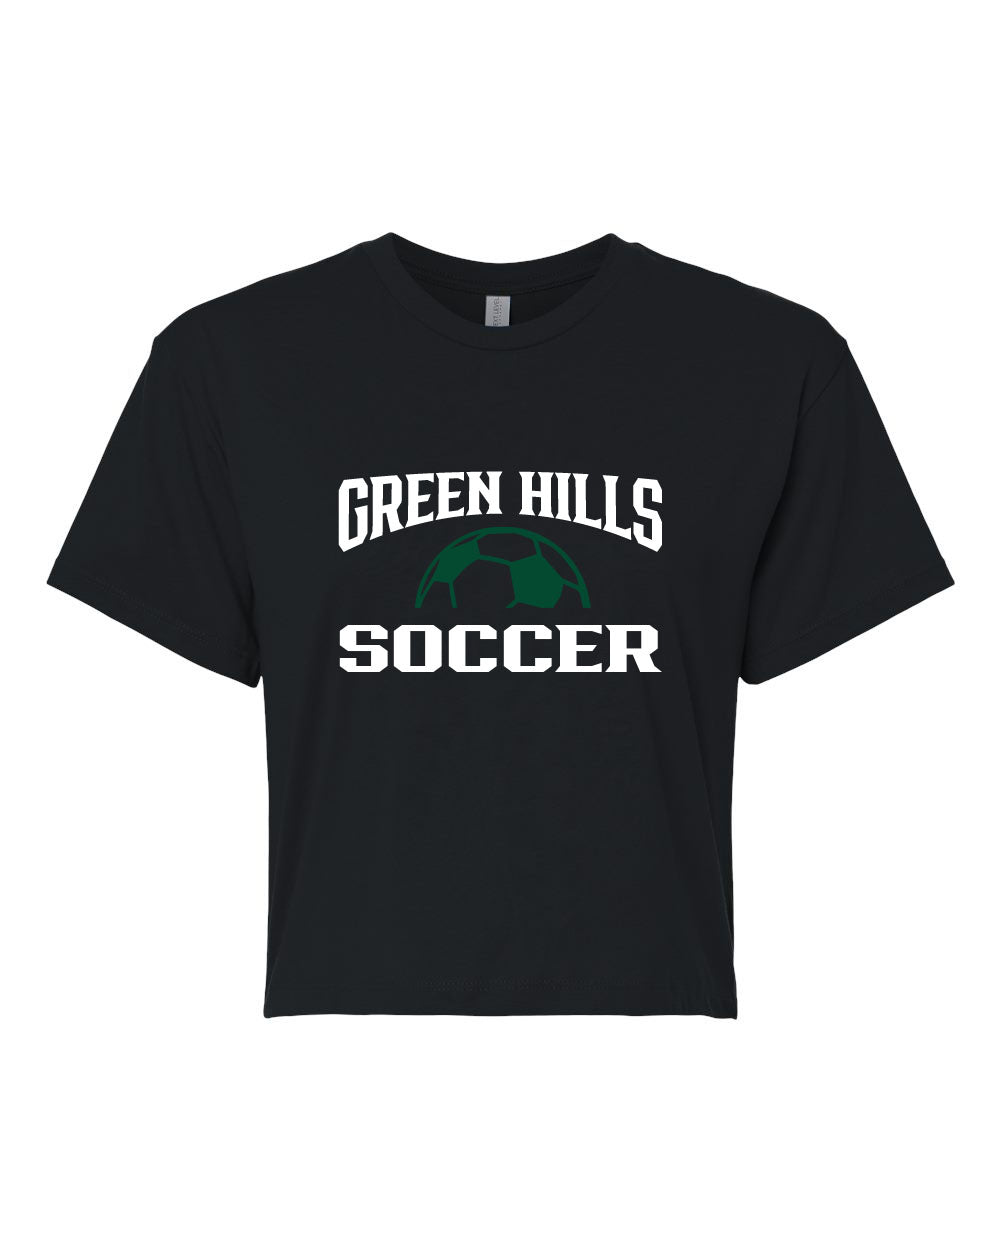 Green Hills Soccer design 1 Crop Top